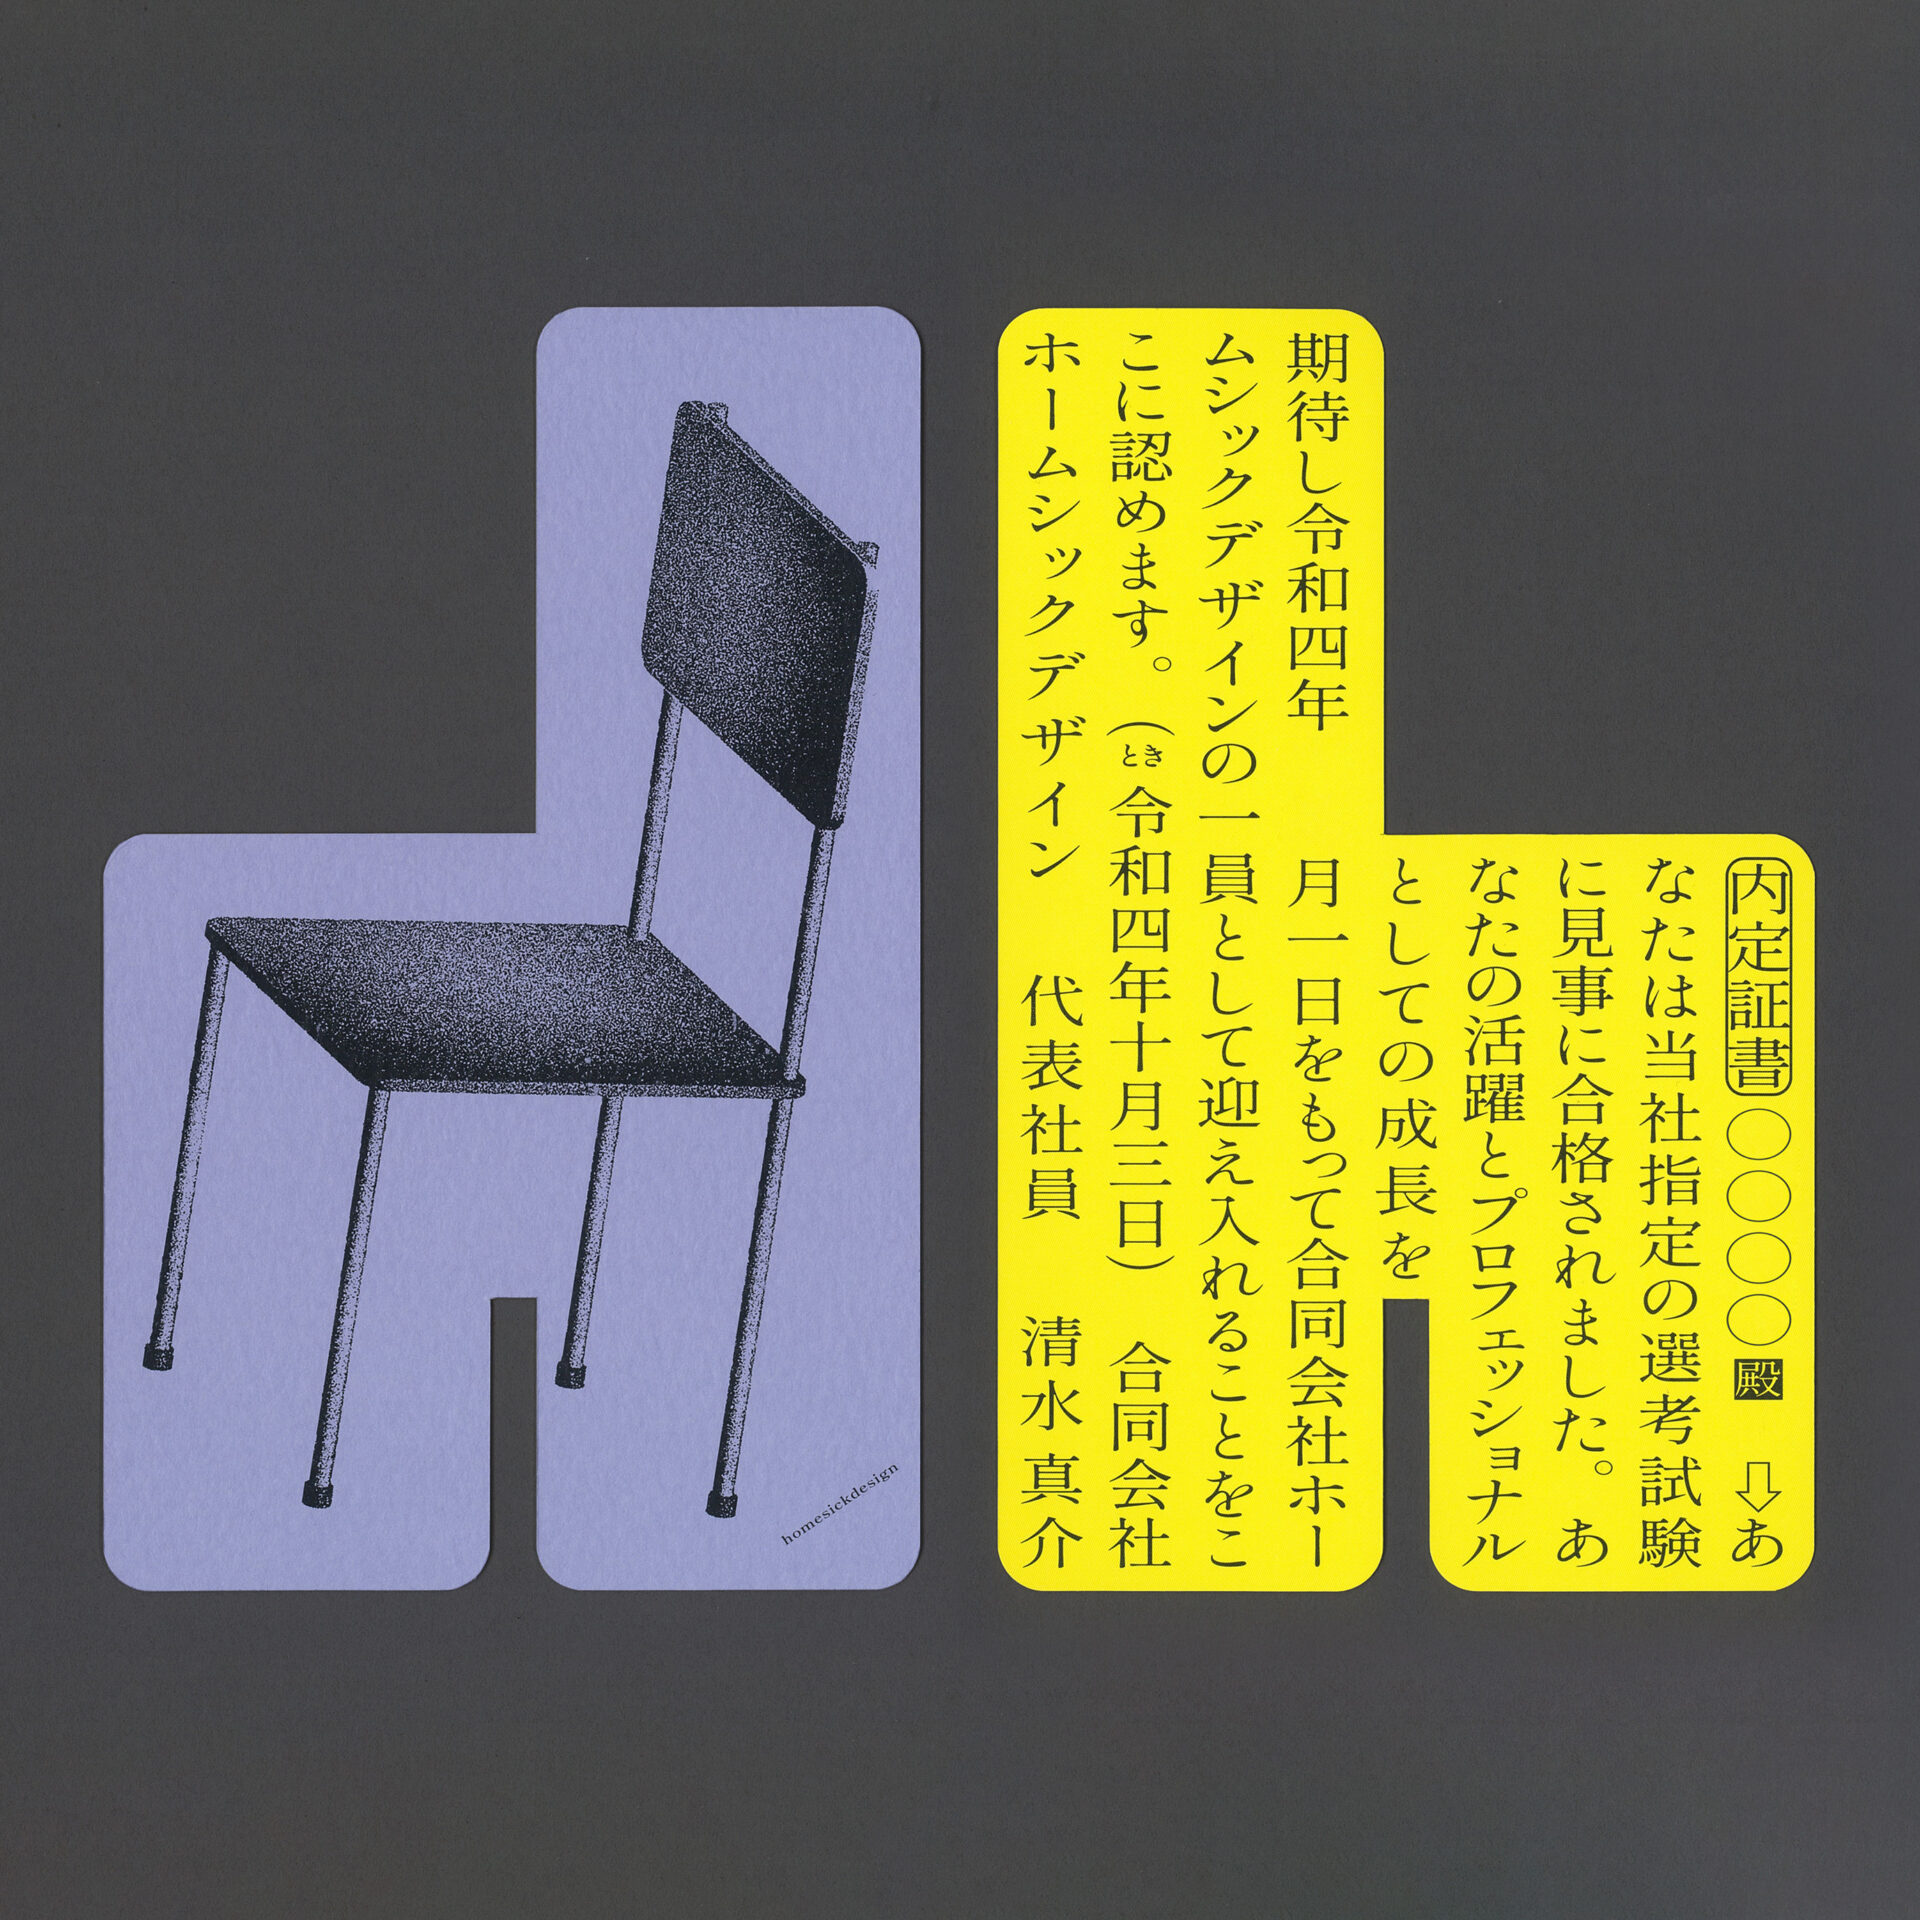 Dirtybarn Interviews Kenichi Kuromaru: Distinctive Approach with Shape, Detail and Typography 10